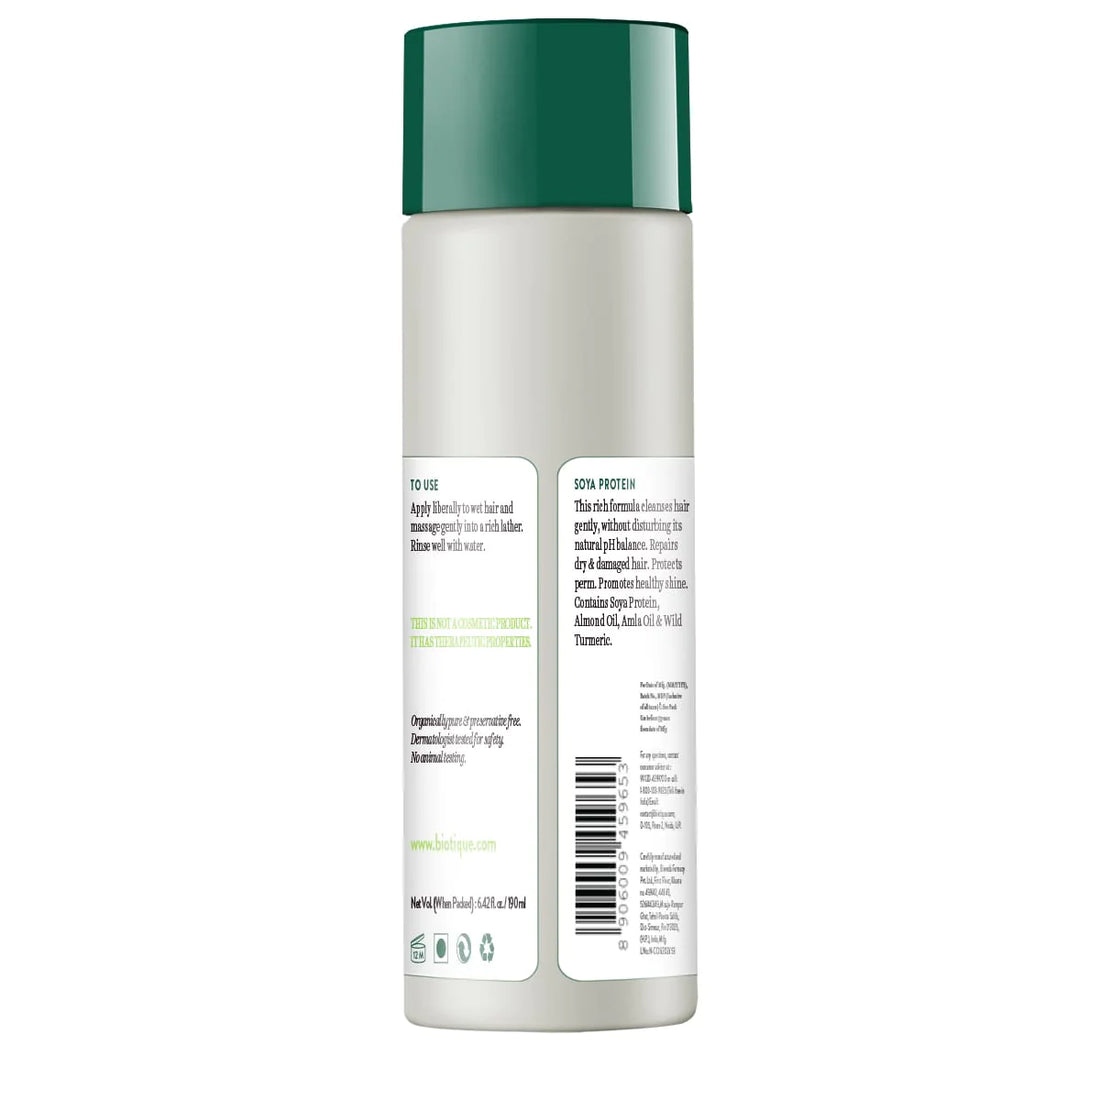 Biotique Soya Protein Intense Repair Shampoo & Conditioner